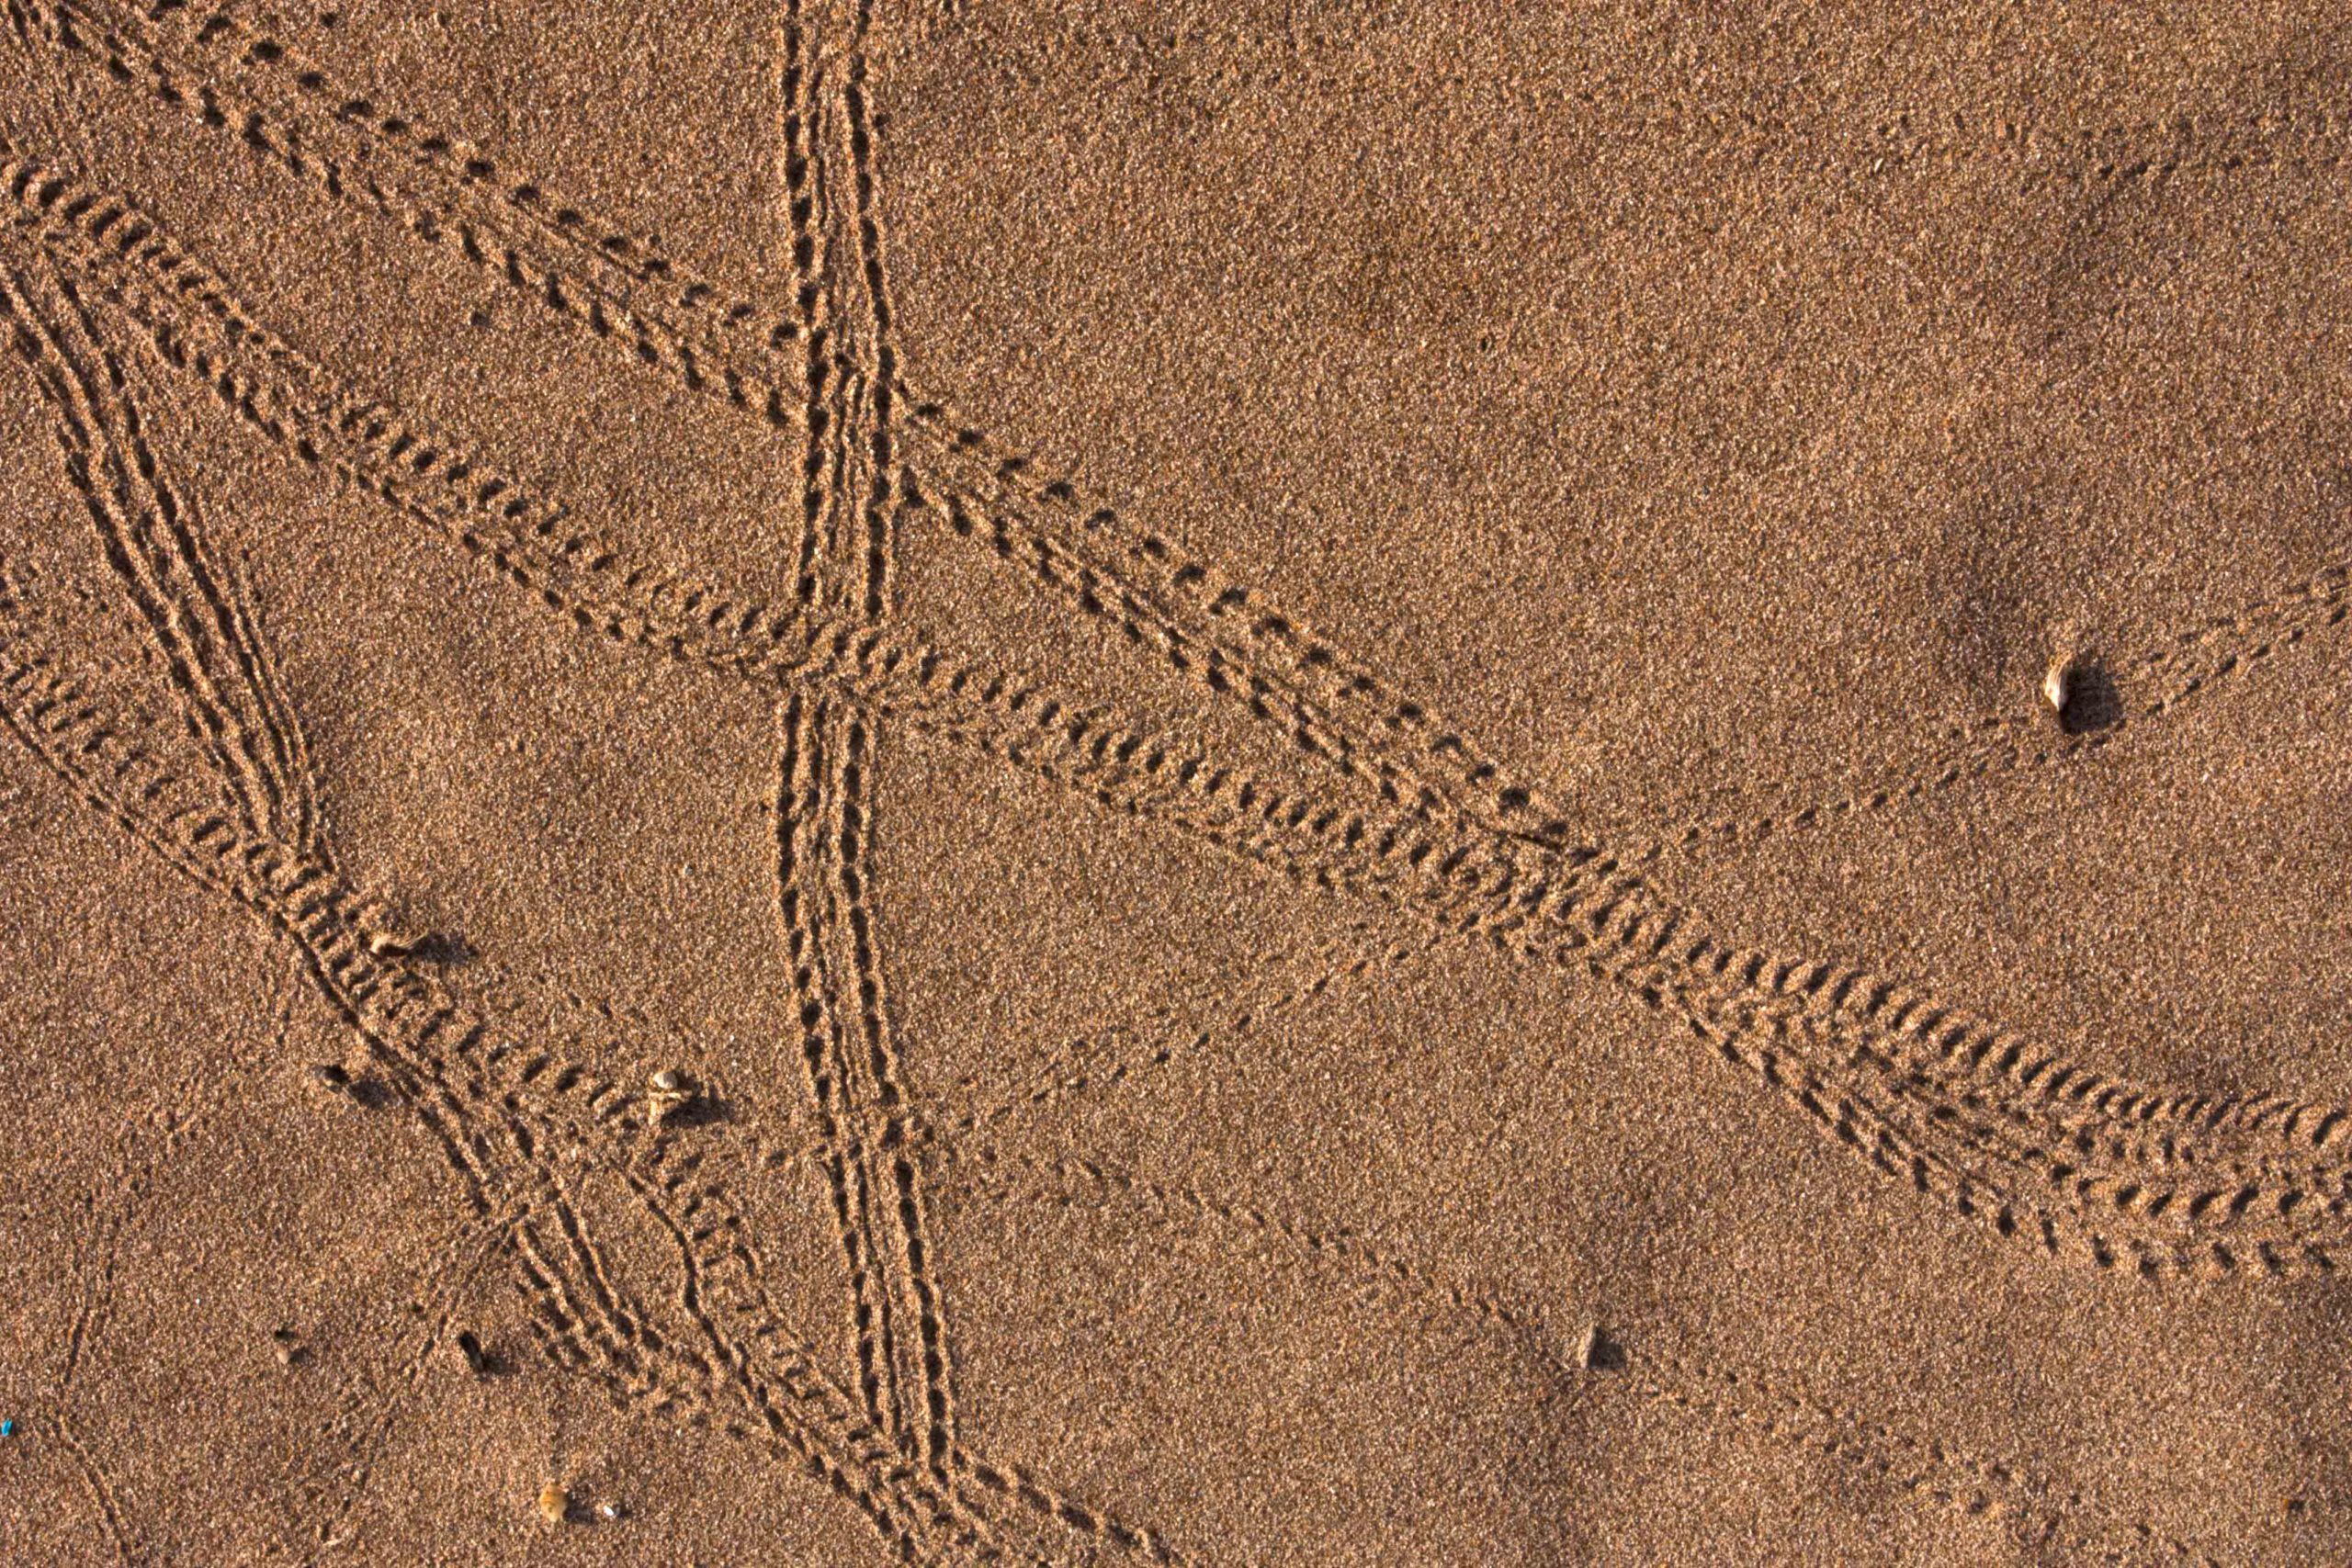 Tracks in the Australian outback